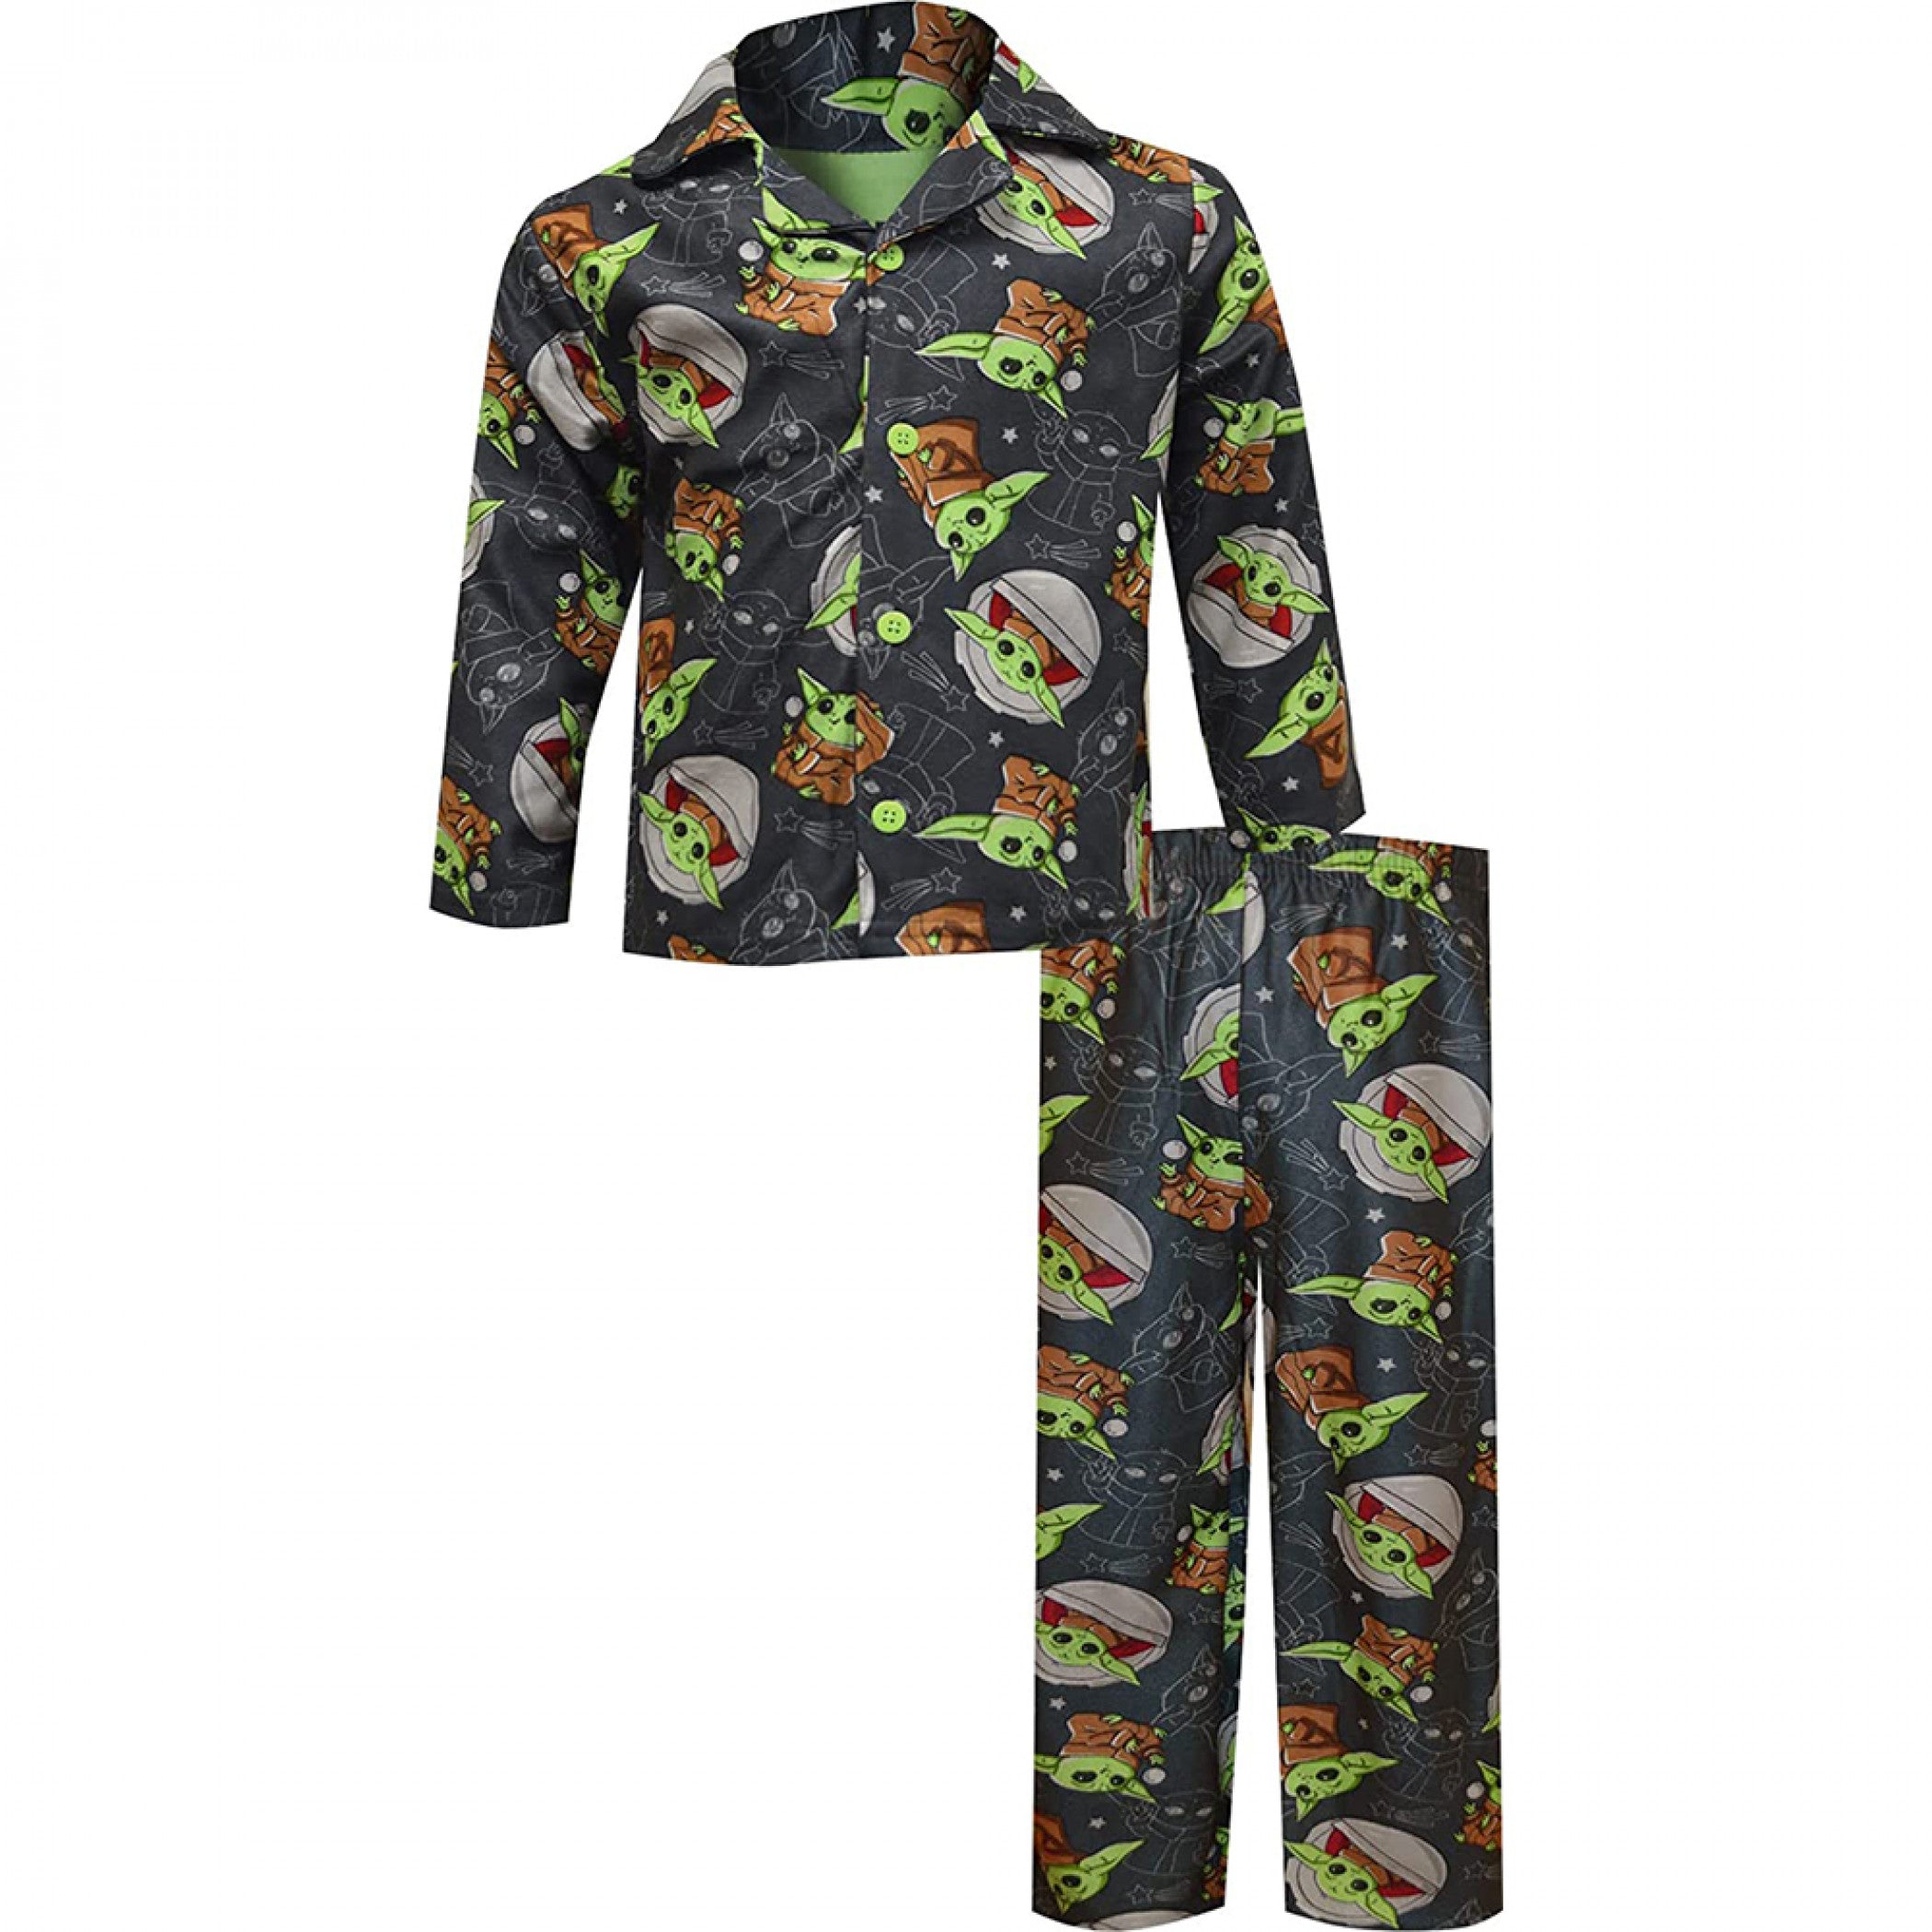 title:Star Wars The Mandalorian Grogu Character All Over Pajama Set;color:Black